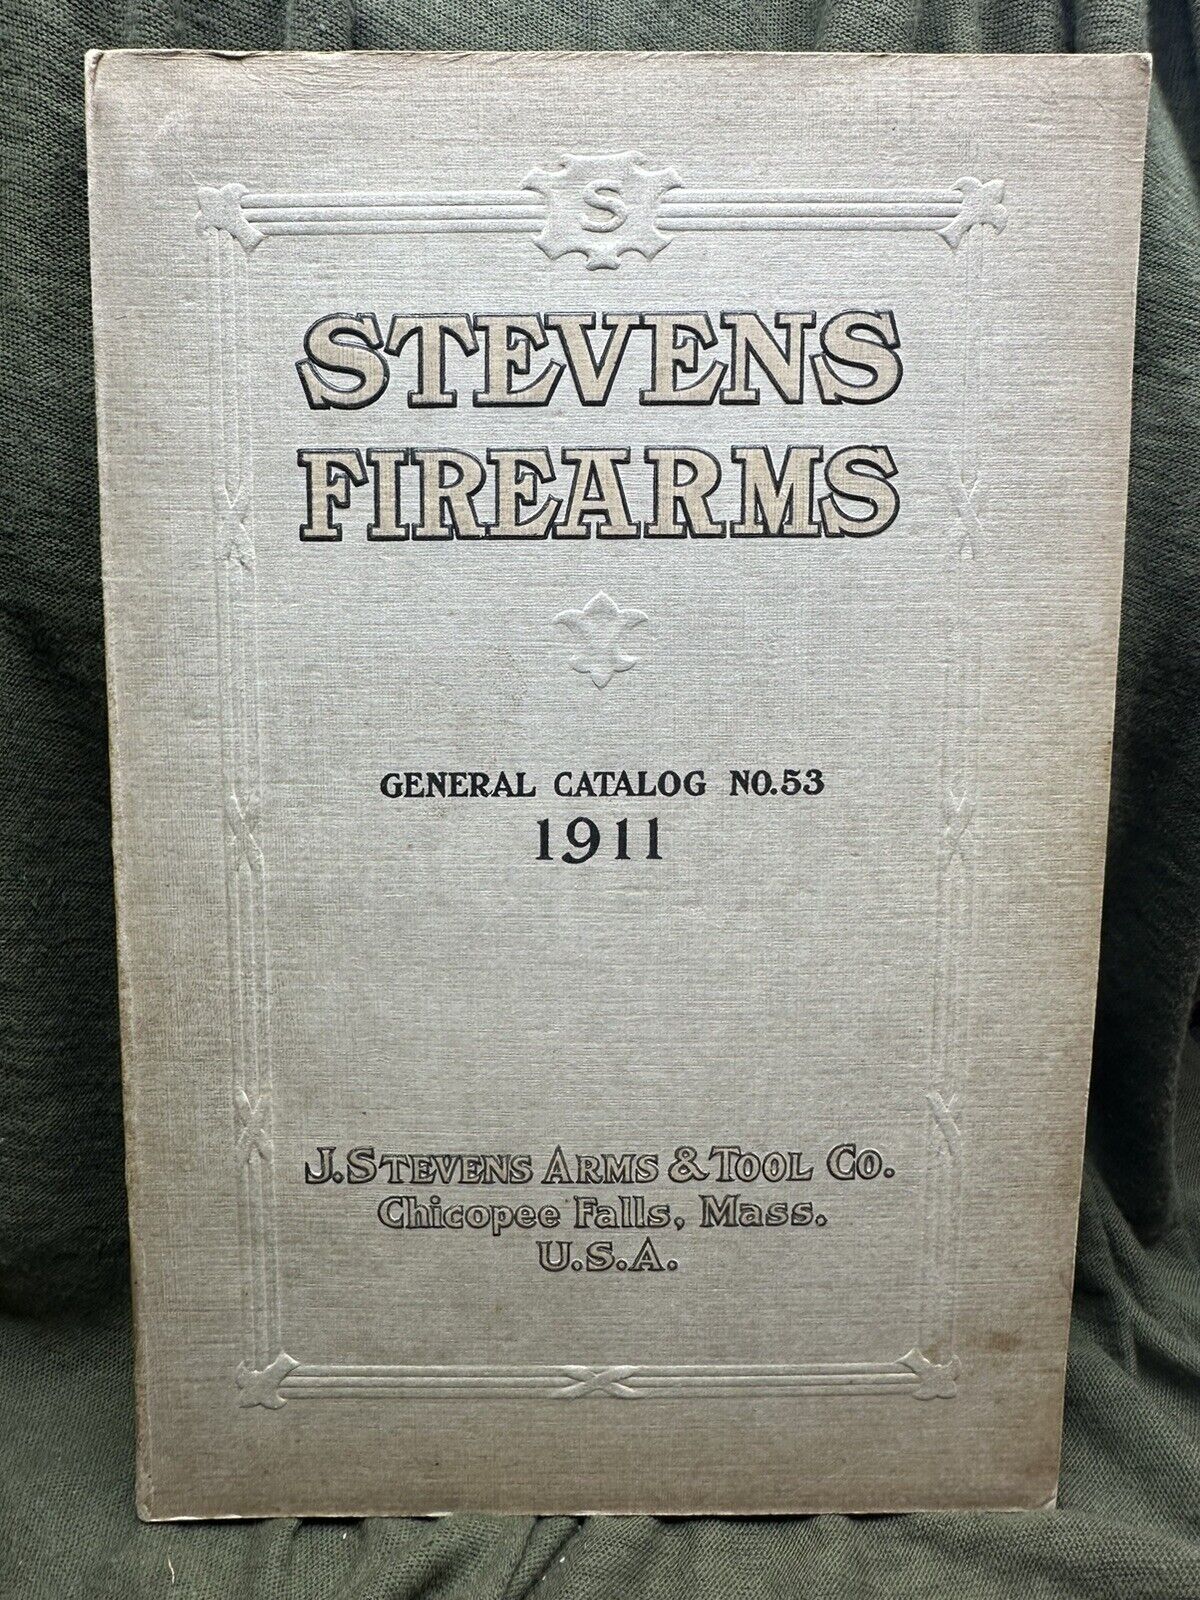 Vintage Stevens Firearms General Catalog No. 53 - 1911.  Chicopee Falls, Mass